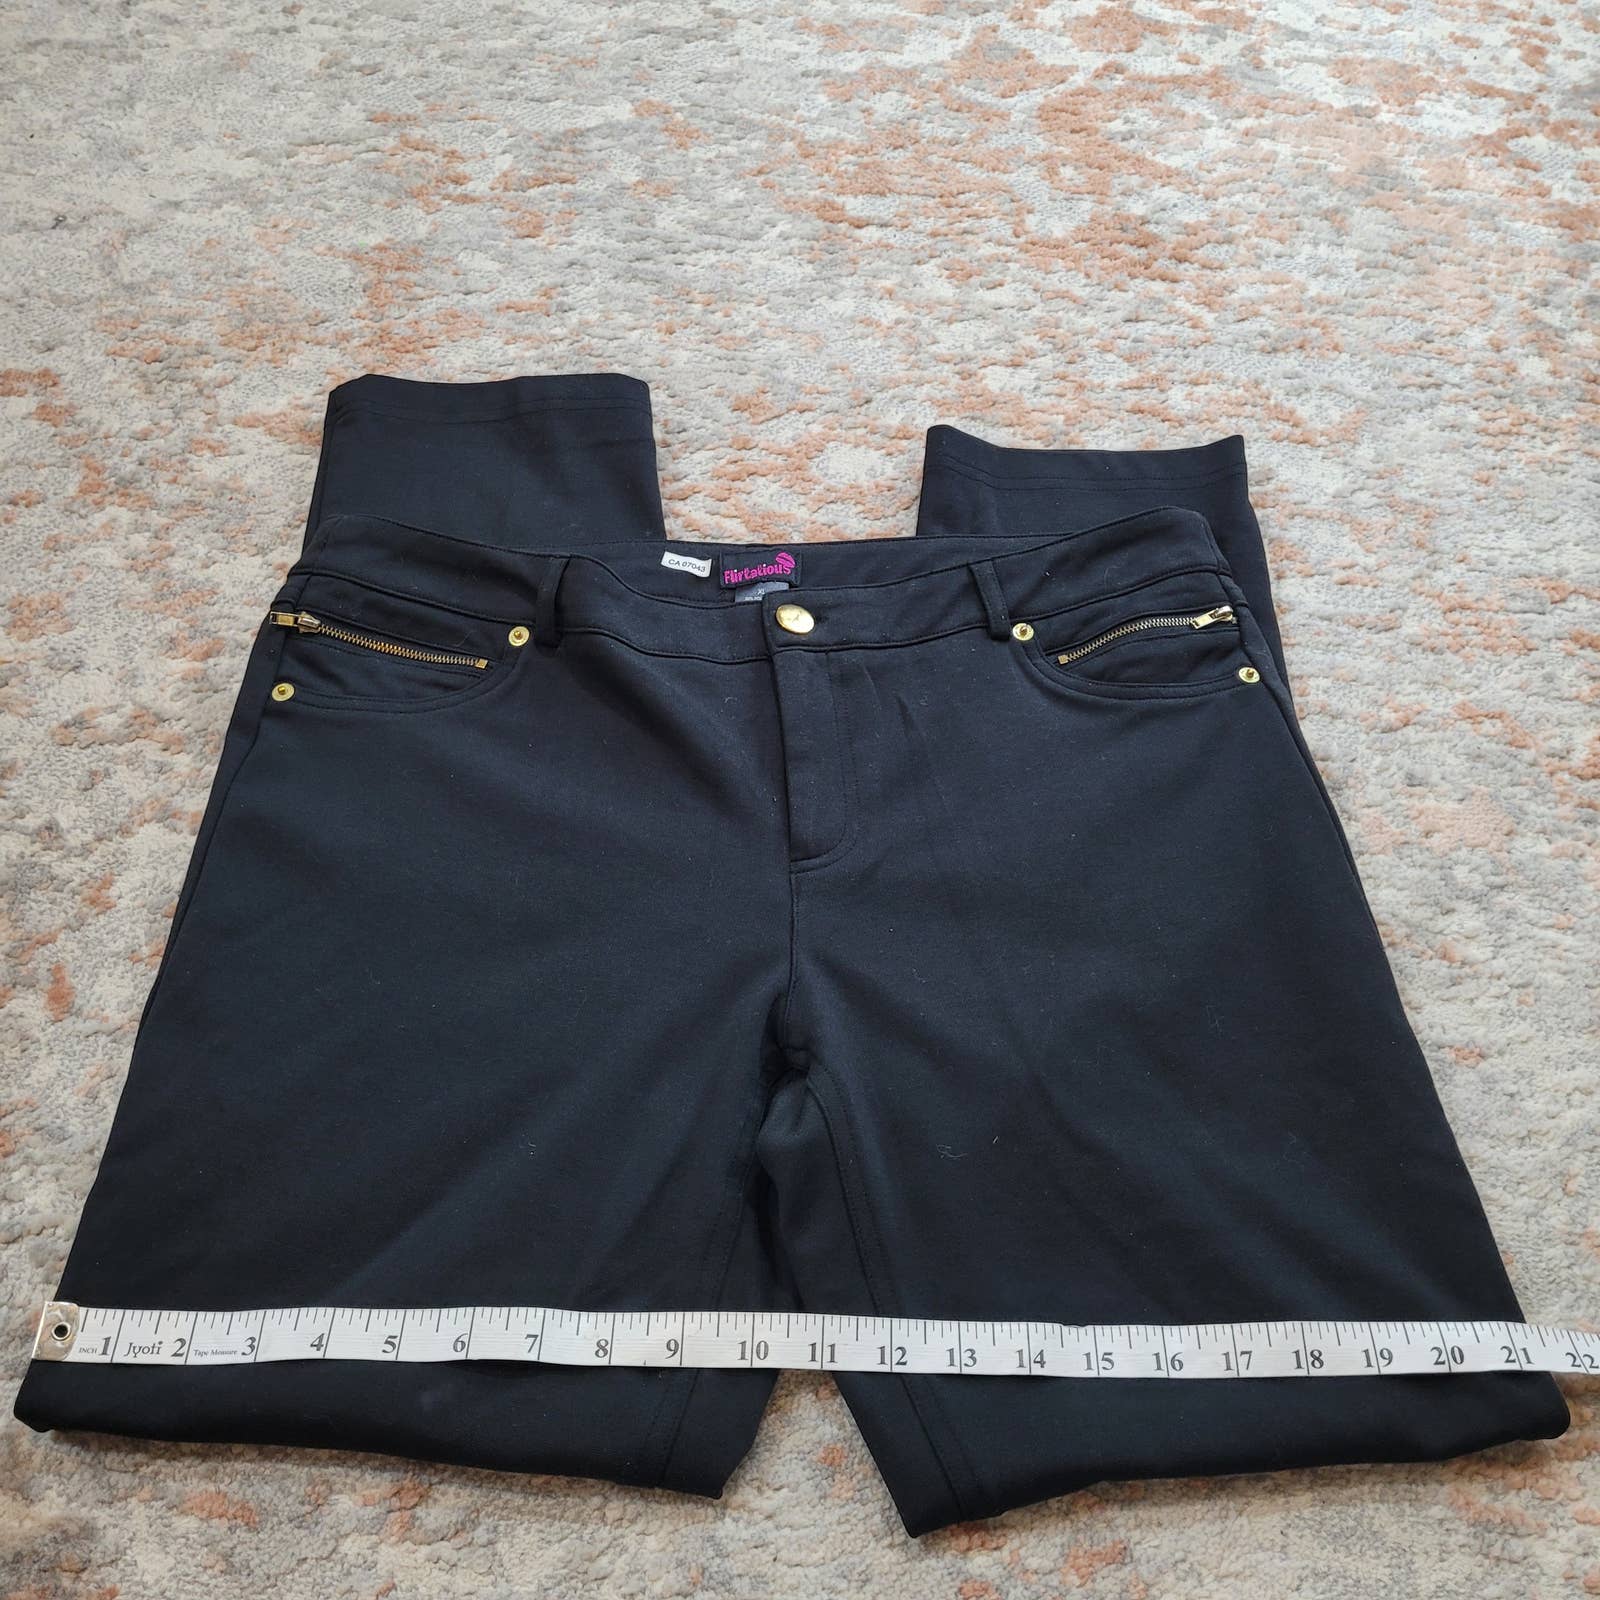 Flirtatious Black Pants - Size Extra LargeMarkita's ClosetFlirtatious